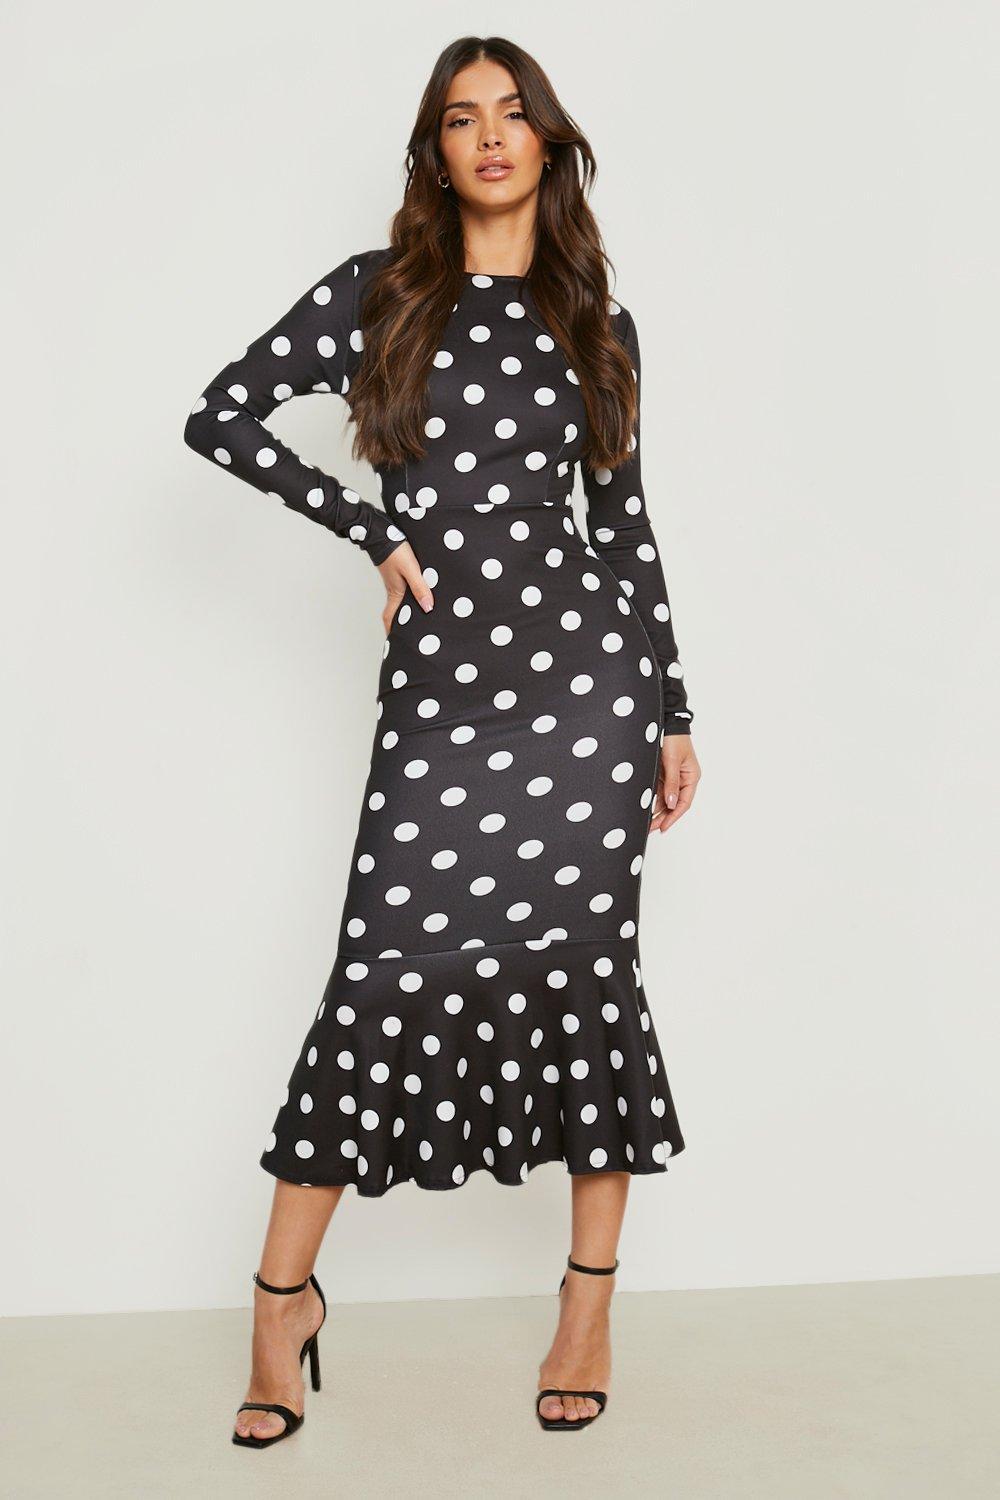 long white dress with black polka dots